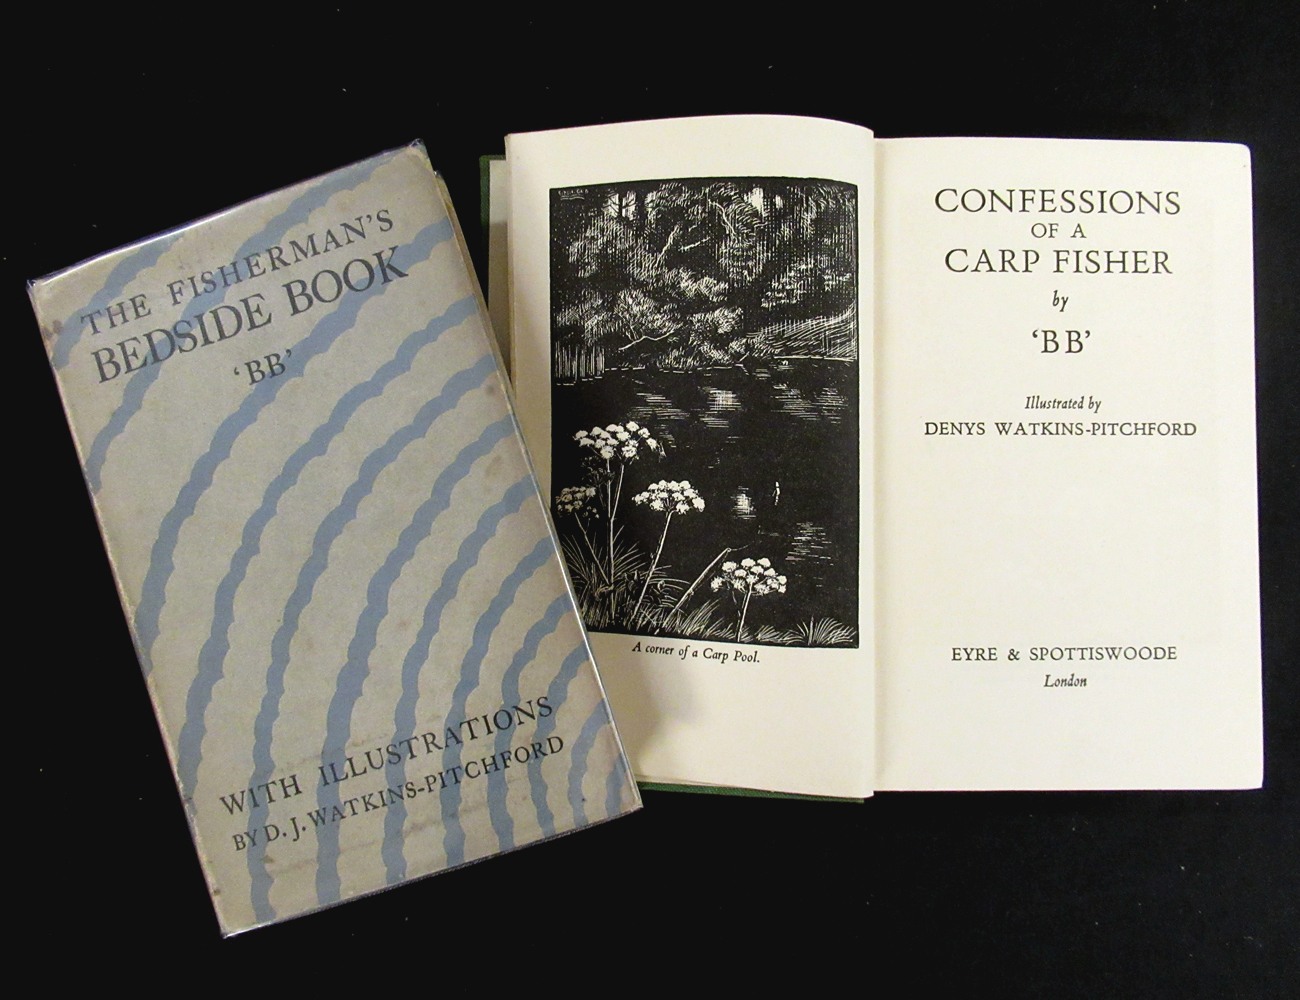 D J WATKINS PITCHFORD "BB": THE FISHERMAN'S BEDSIDE BOOK, London, Eyre & Spottiswoode, 1945, 1st